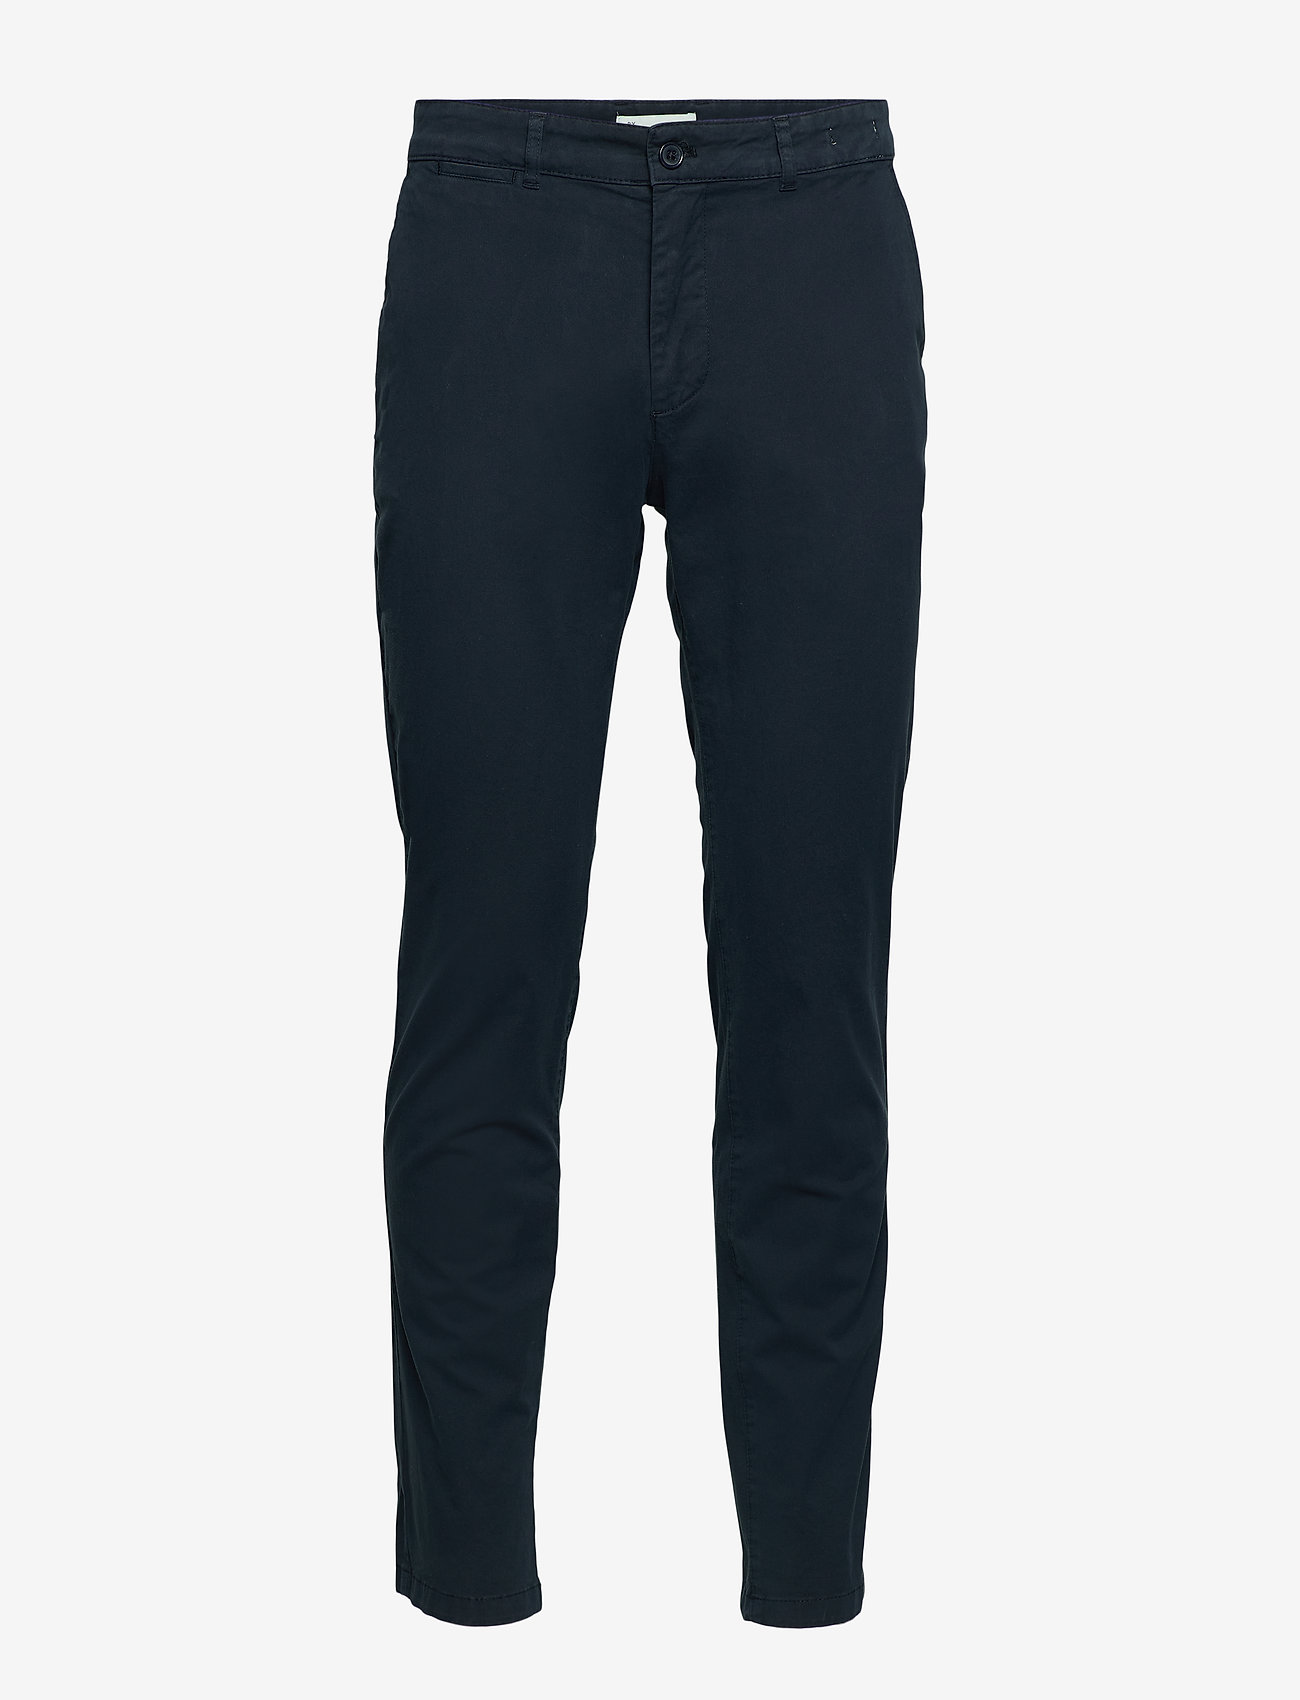 By Garment Makers - The Organic Chino Pants - chinos - navy blazer - 0